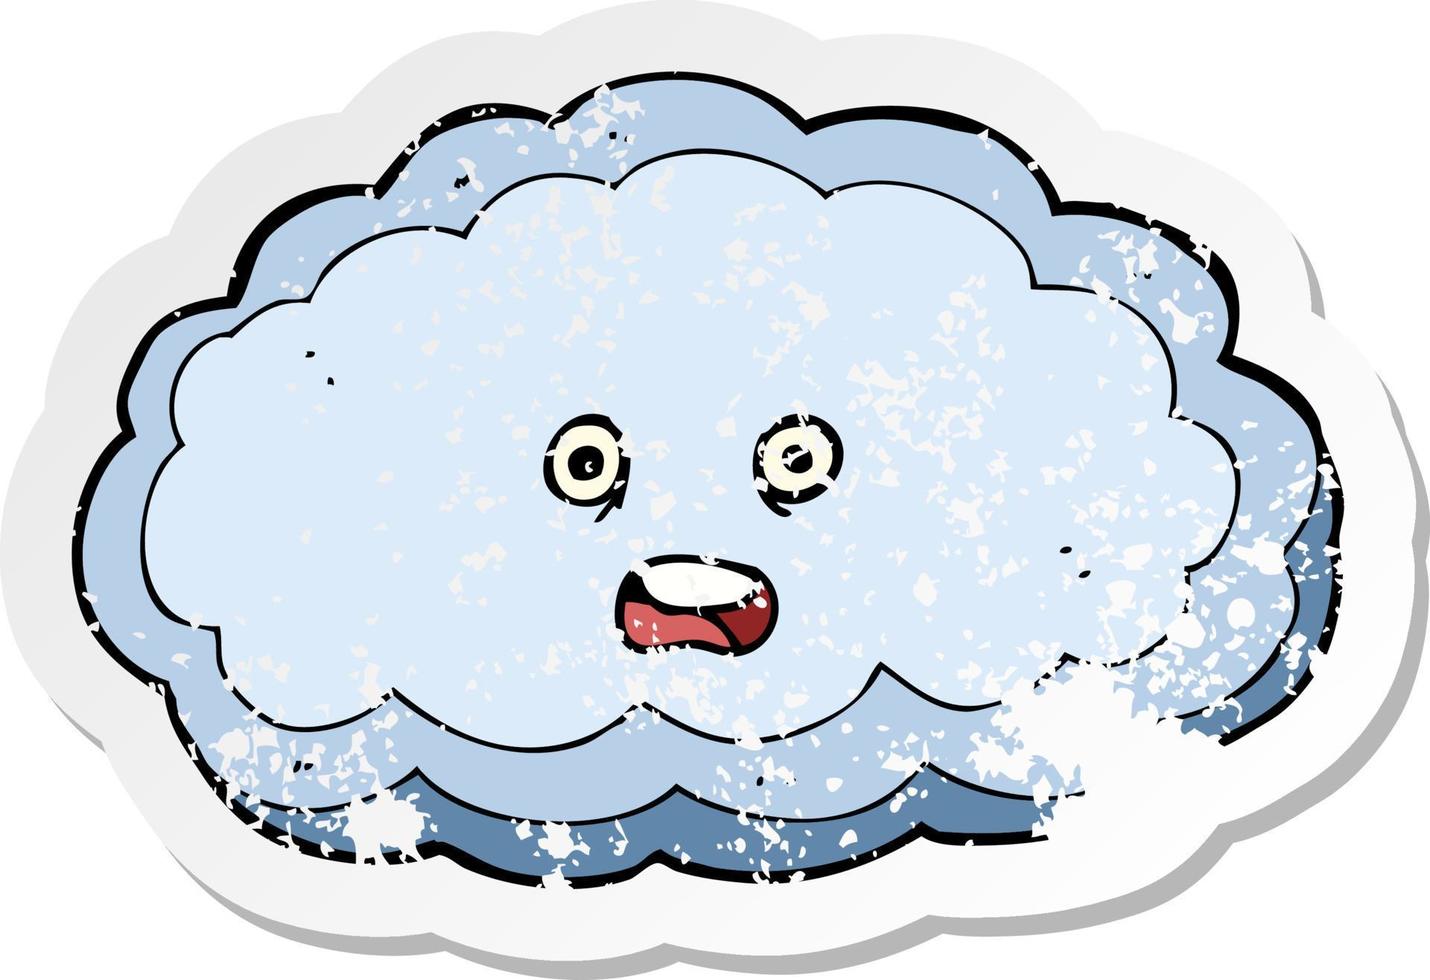 retro distressed sticker of a cartoon decorative cloud vector